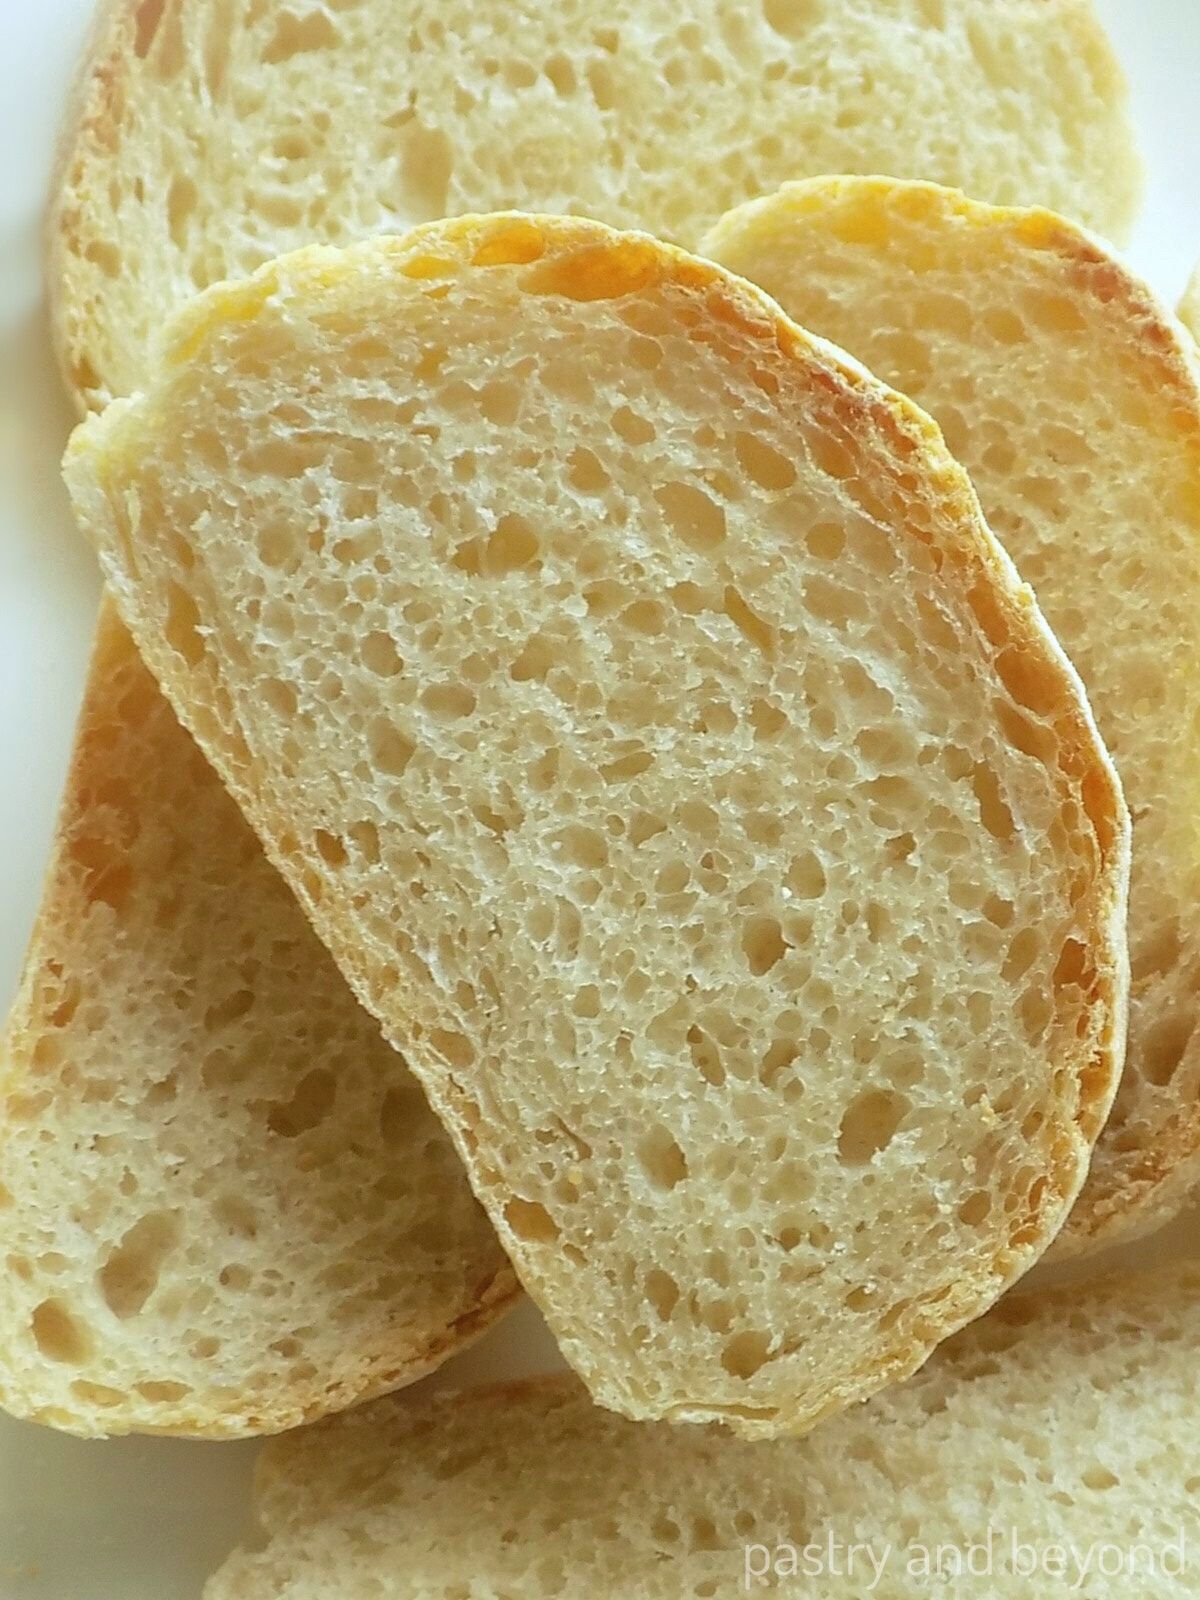 https://pastryandbeyond.com/wp-content/uploads/2020/04/No-Knead-Artisan-Bread-1.jpg